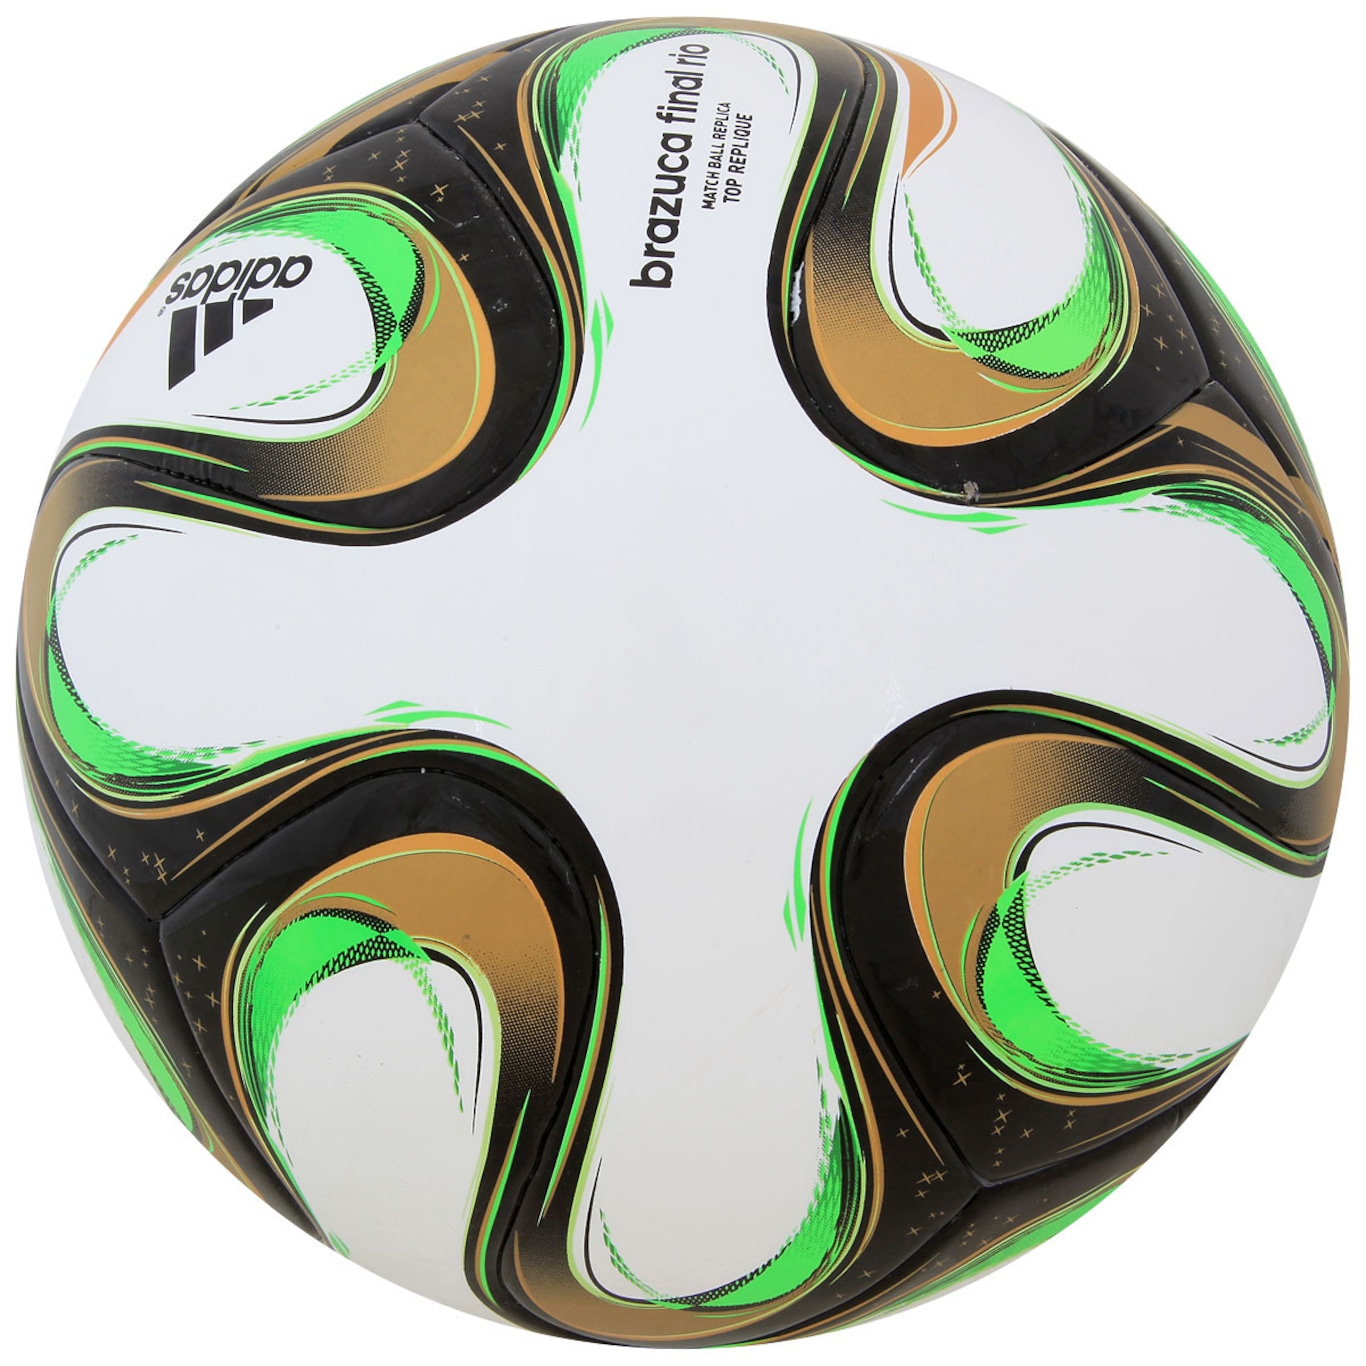 ~Out of Stock~ Adidas Brazuca Final Top Replique Match Ball Replica FIFA  Size 5